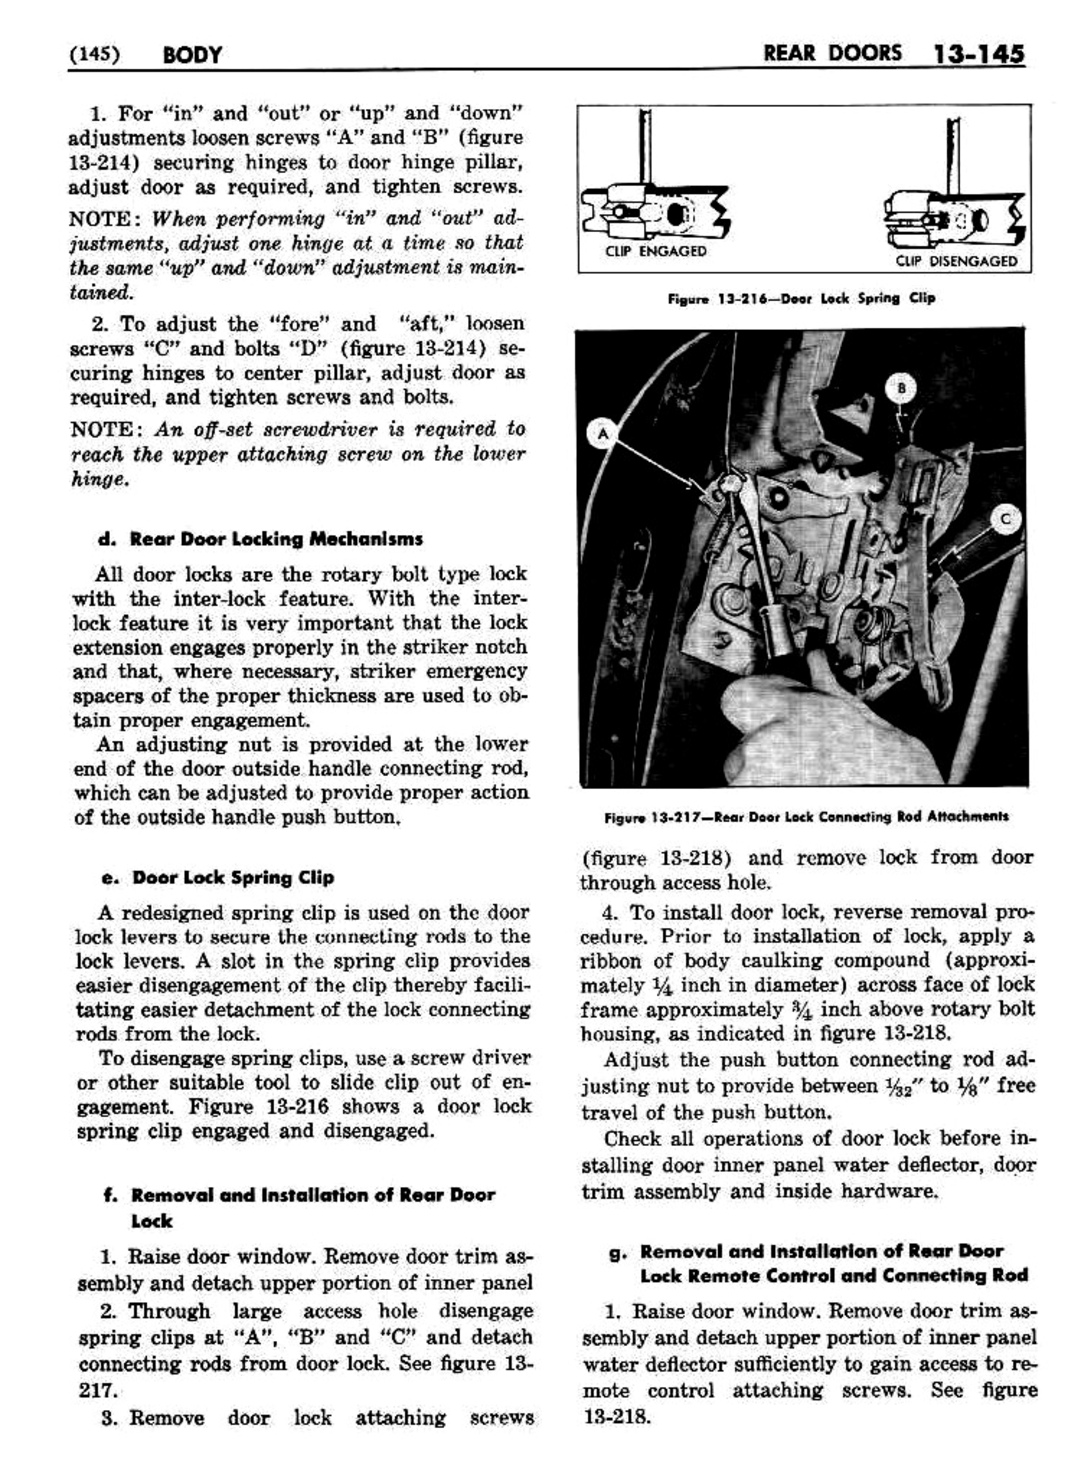 n_1958 Buick Body Service Manual-146-146.jpg